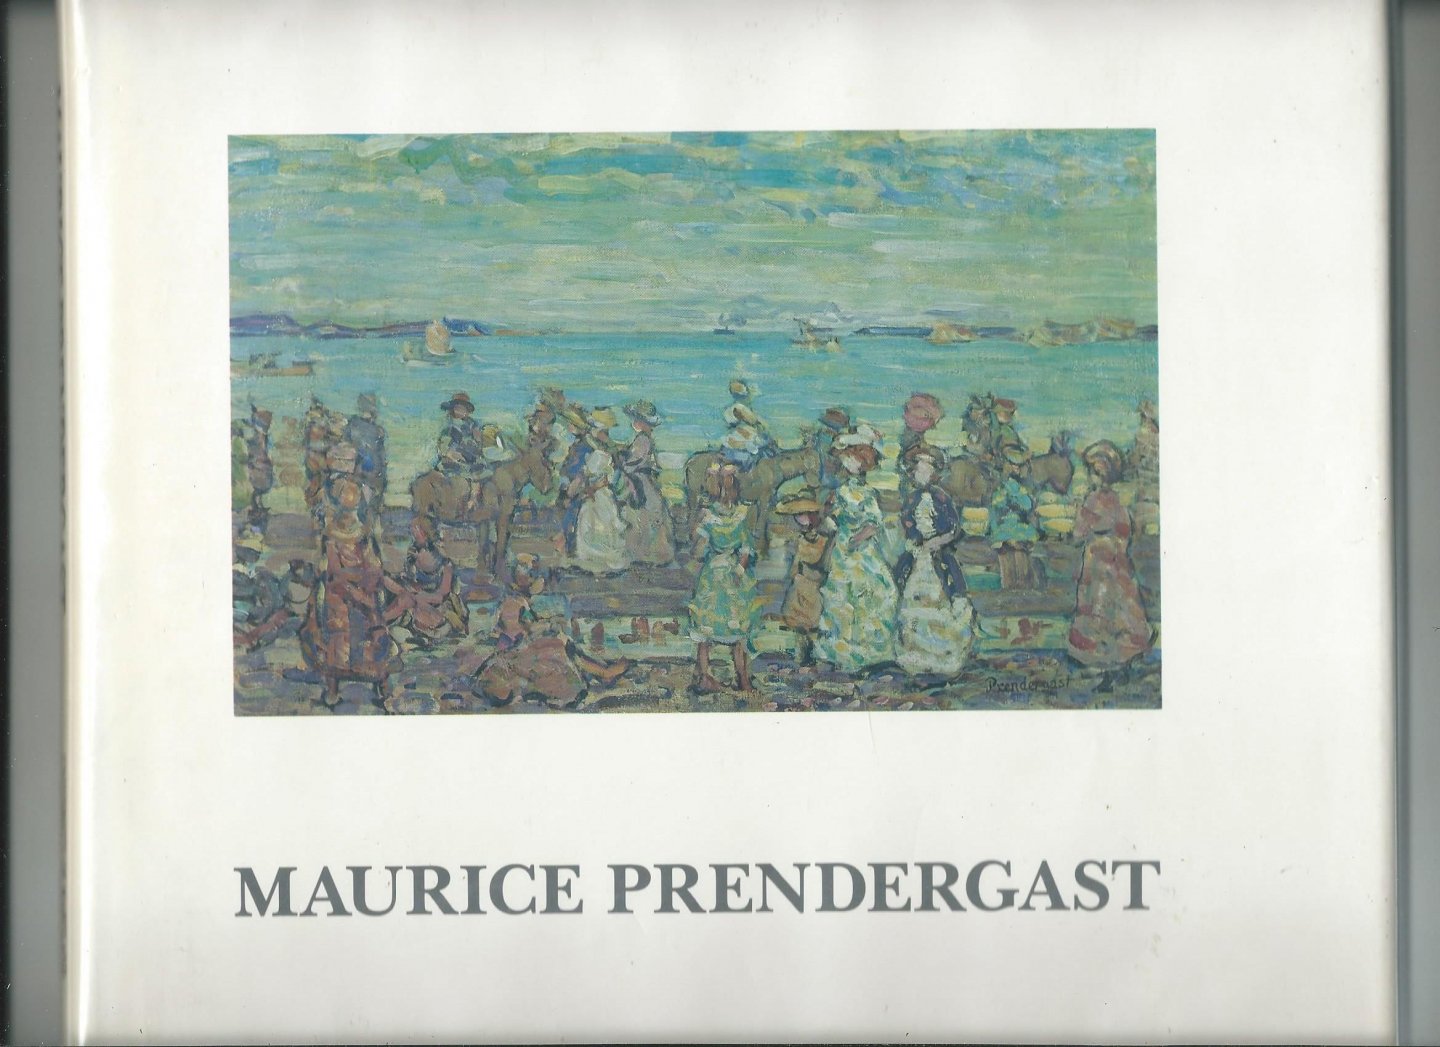 Green, Eleanor - Maurice Prendergast. Art of impulse and colour.